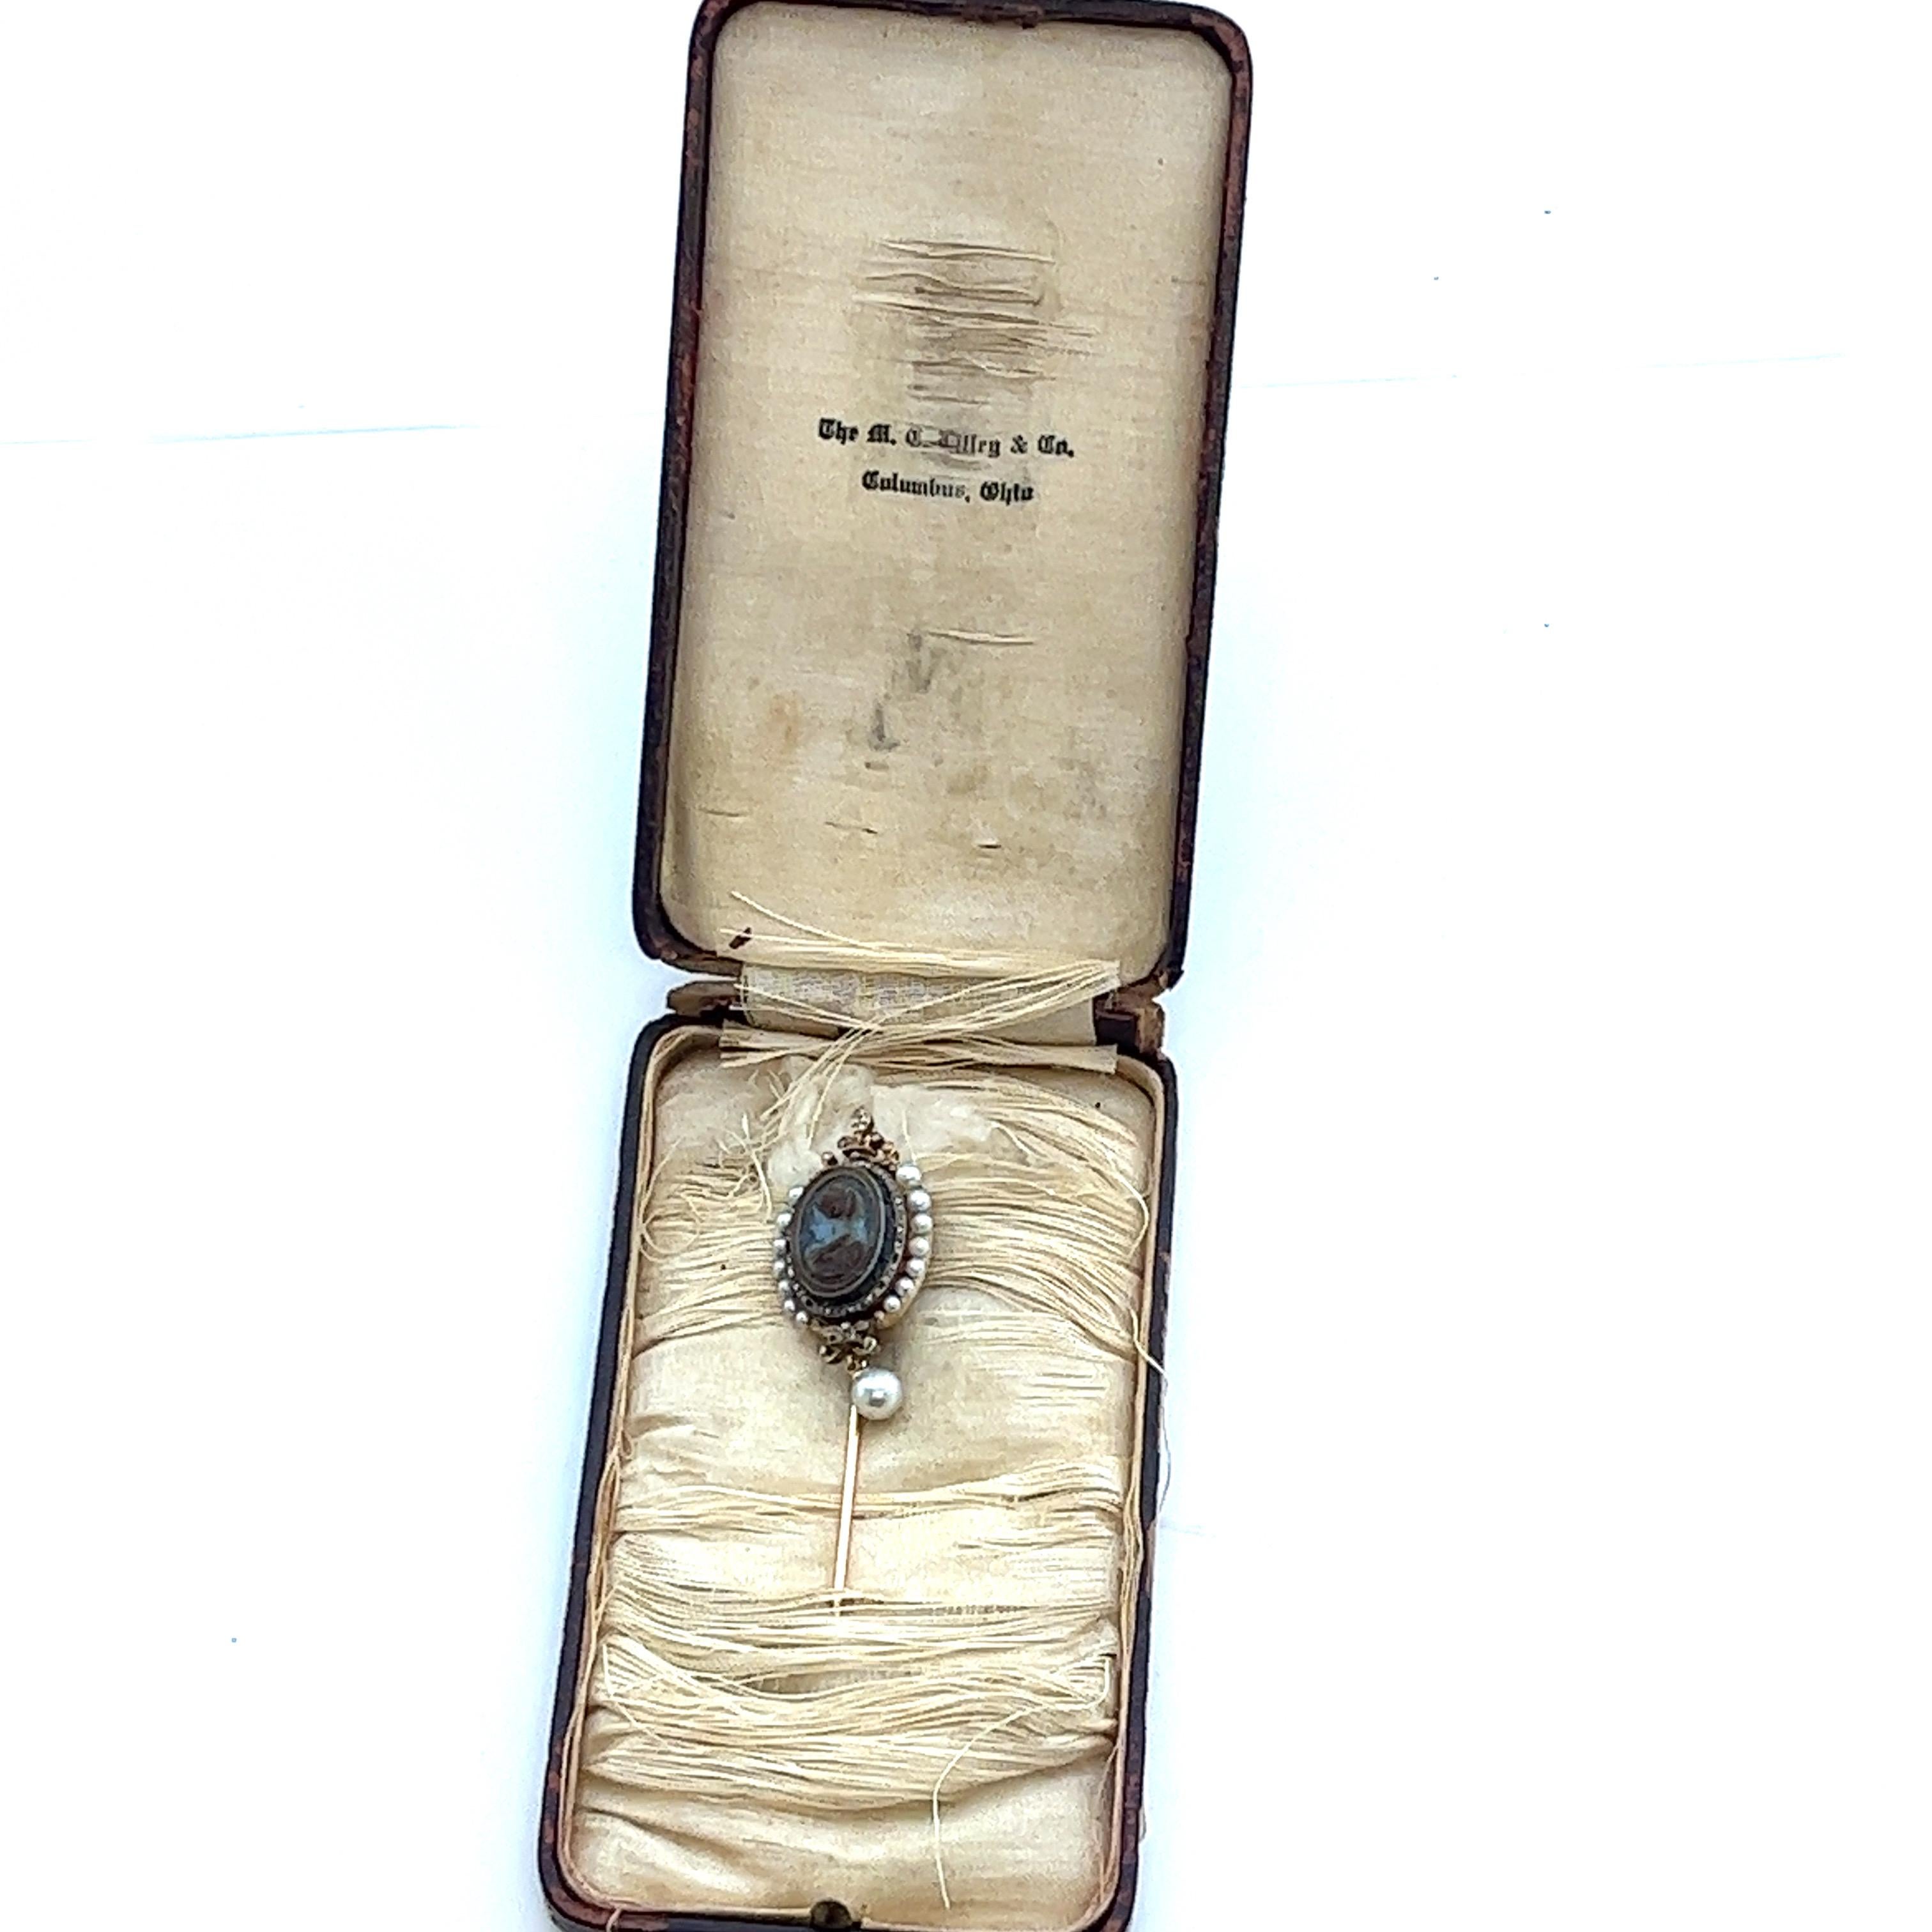 Rose Cut Rare Antique Sardonyx Cameo Pin - 18K Gold, Diamonds, and Pearls, Circa 1850. For Sale